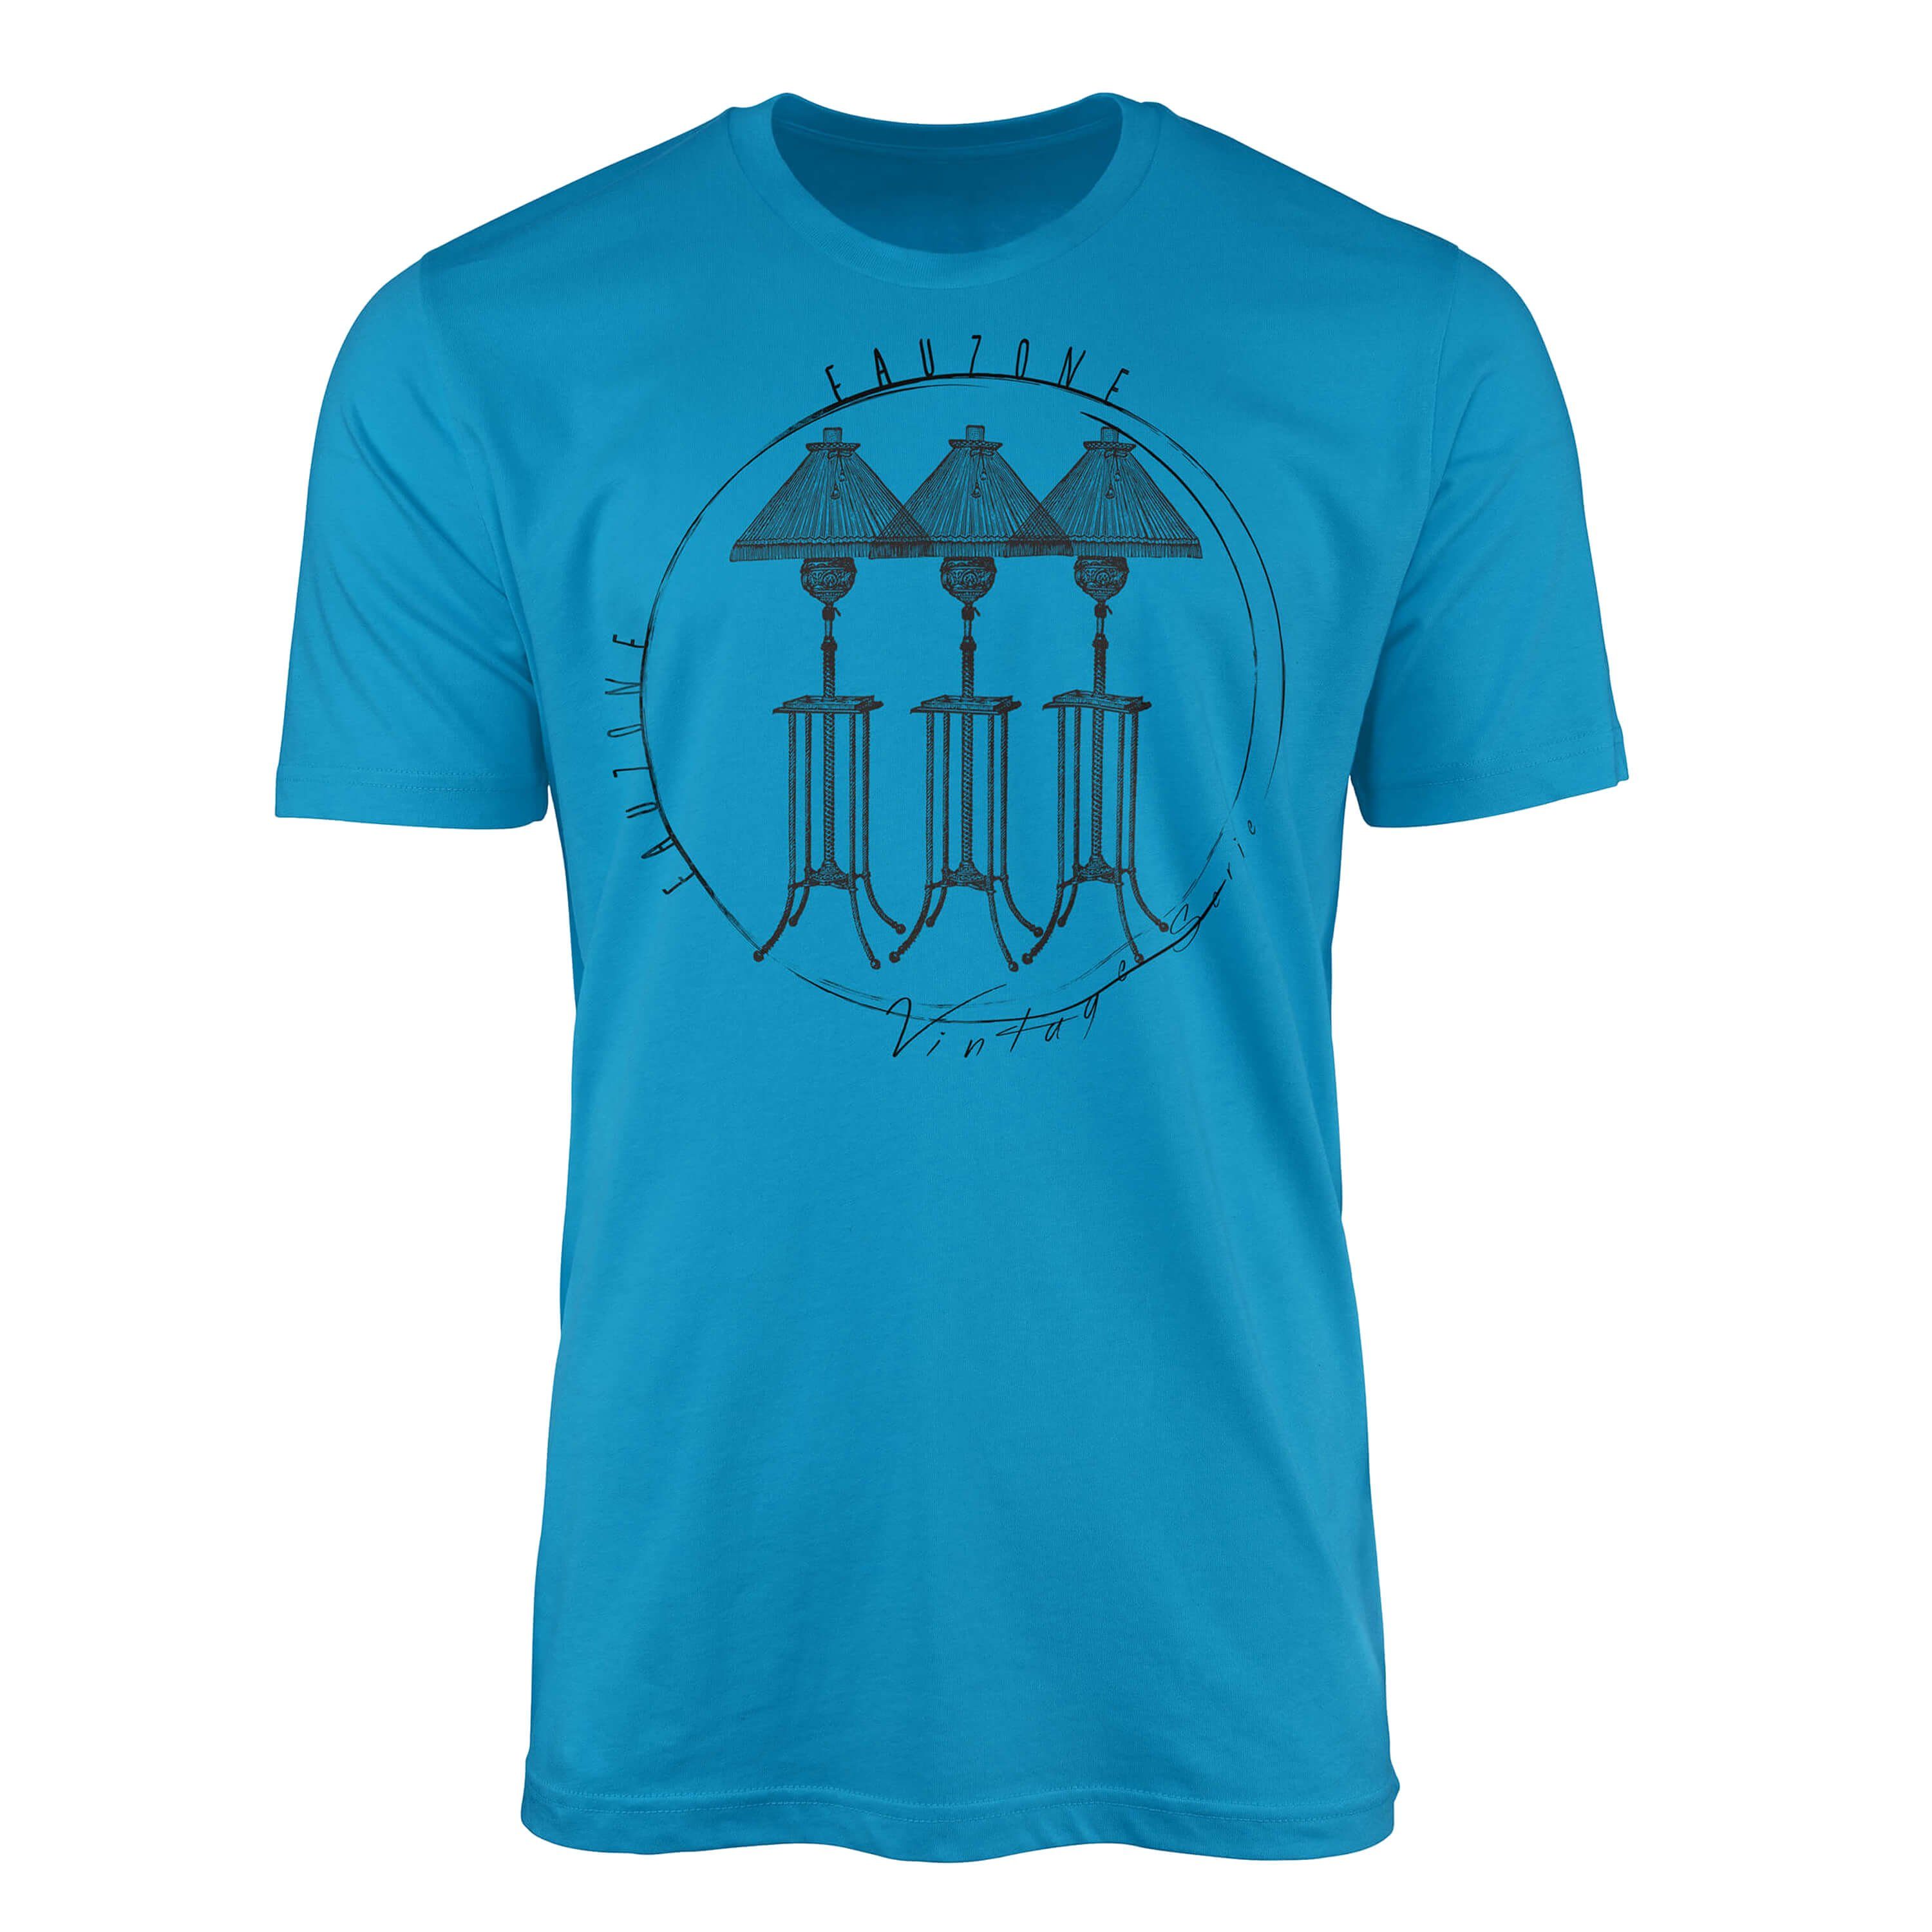 Sinus Art T-Shirt Vintage Herren T-Shirt Stehlampen Atoll